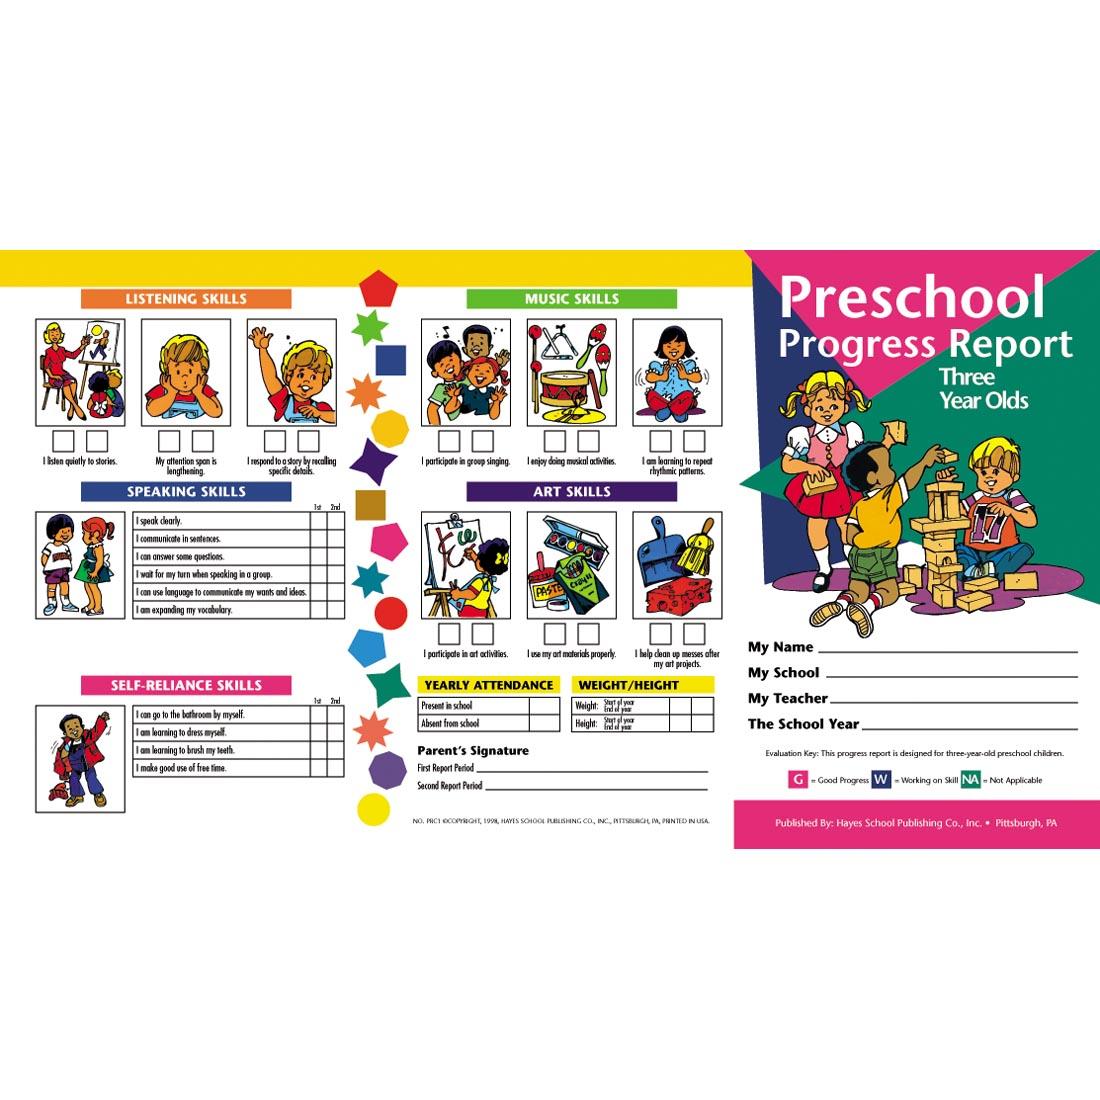 Preschool Progress Report: Three Year Olds